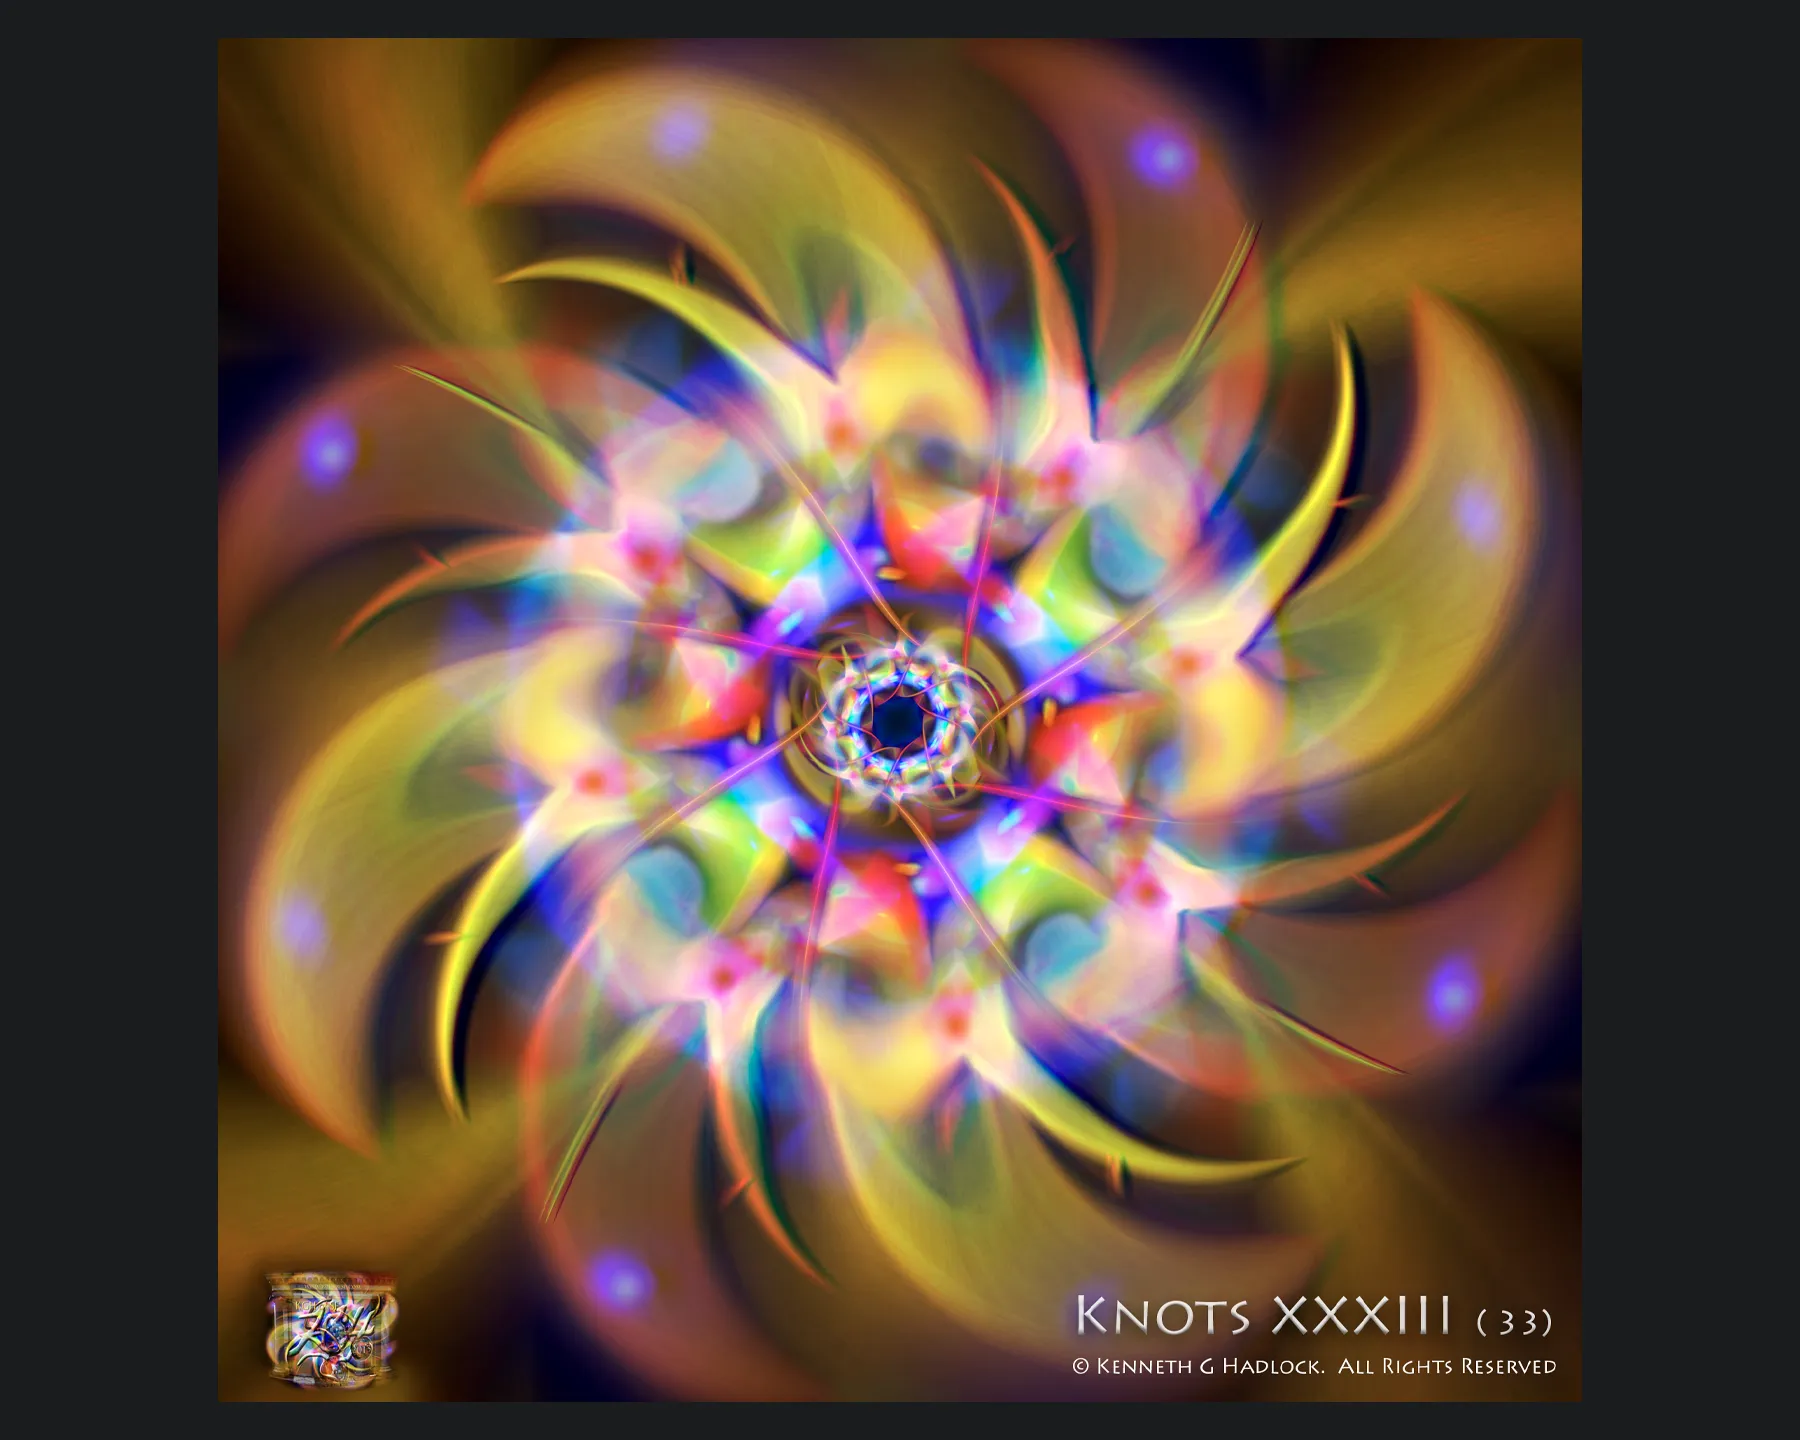 Knots 33. A digital artwork by K.G. Hadlock